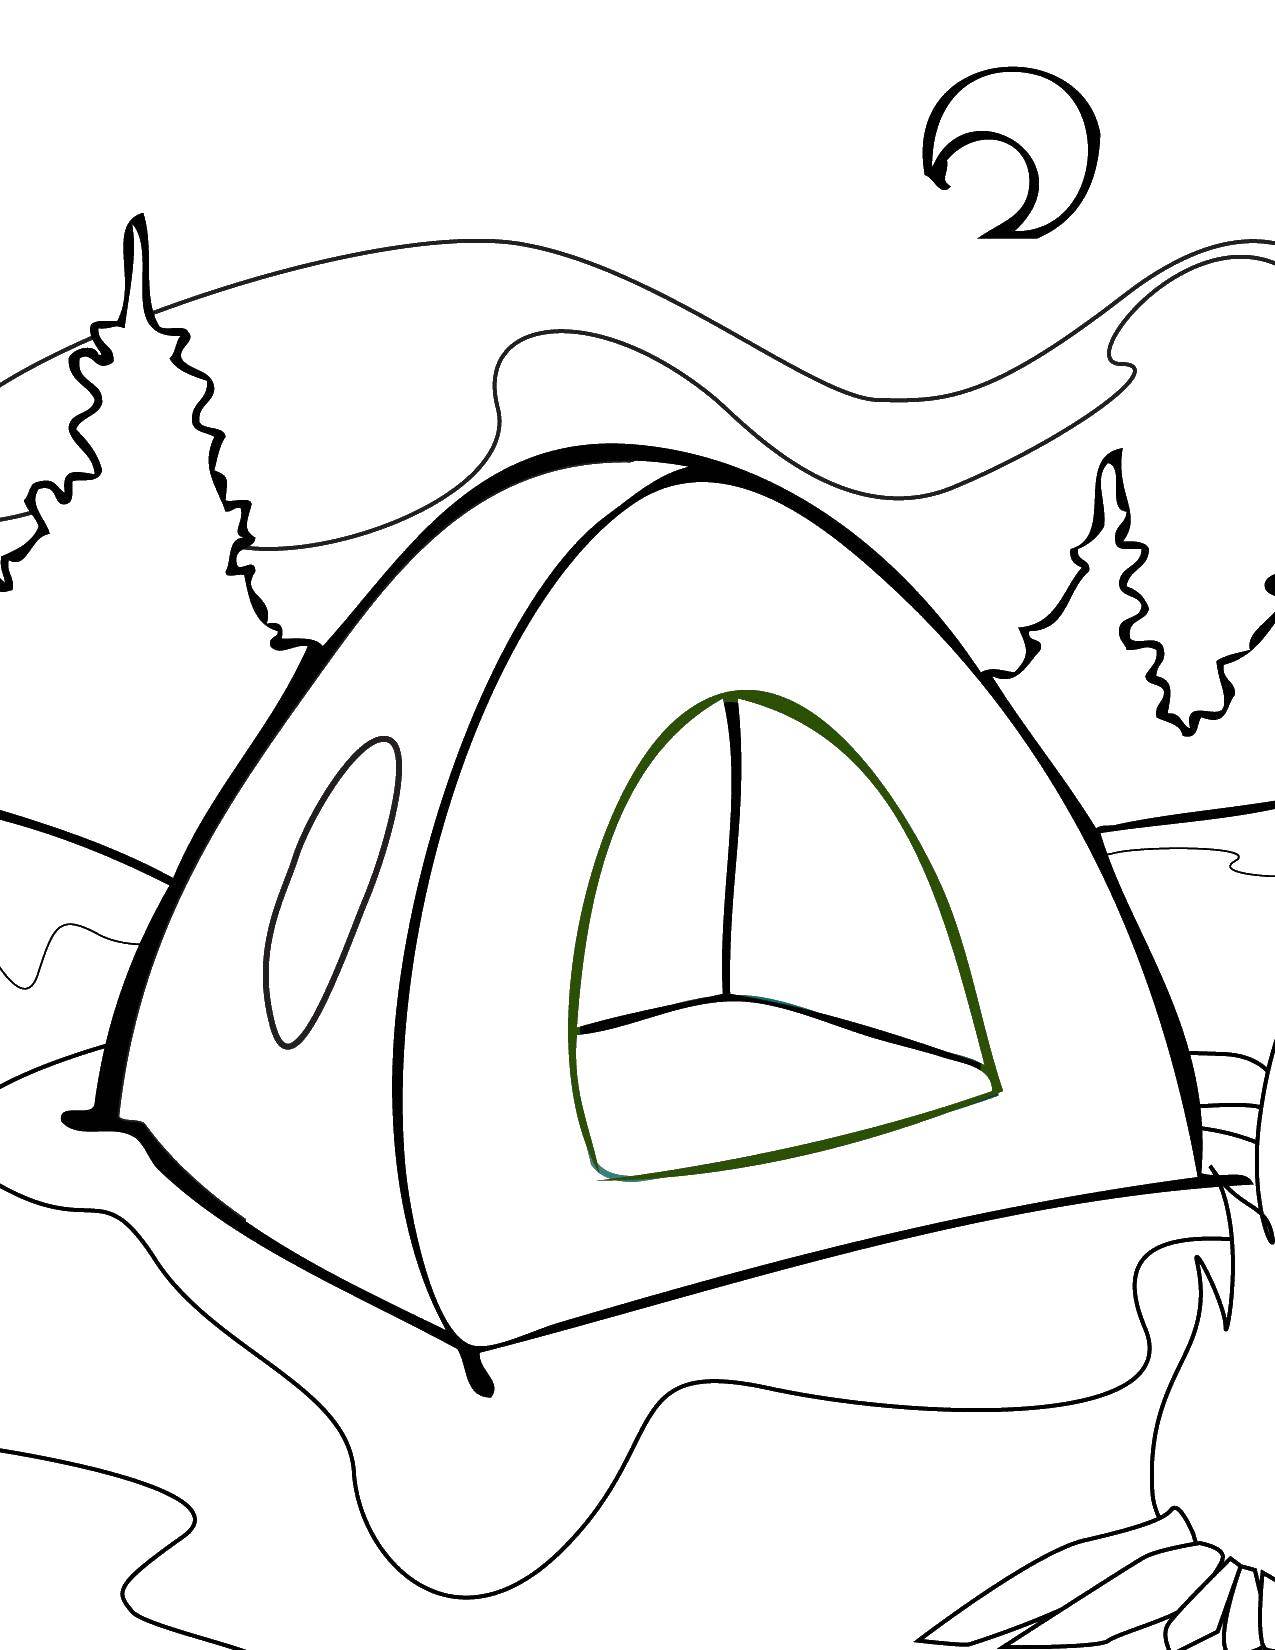 Название: Раскраска Палатка. Категория: Отдых на природе. Теги: Отдых, палатка.